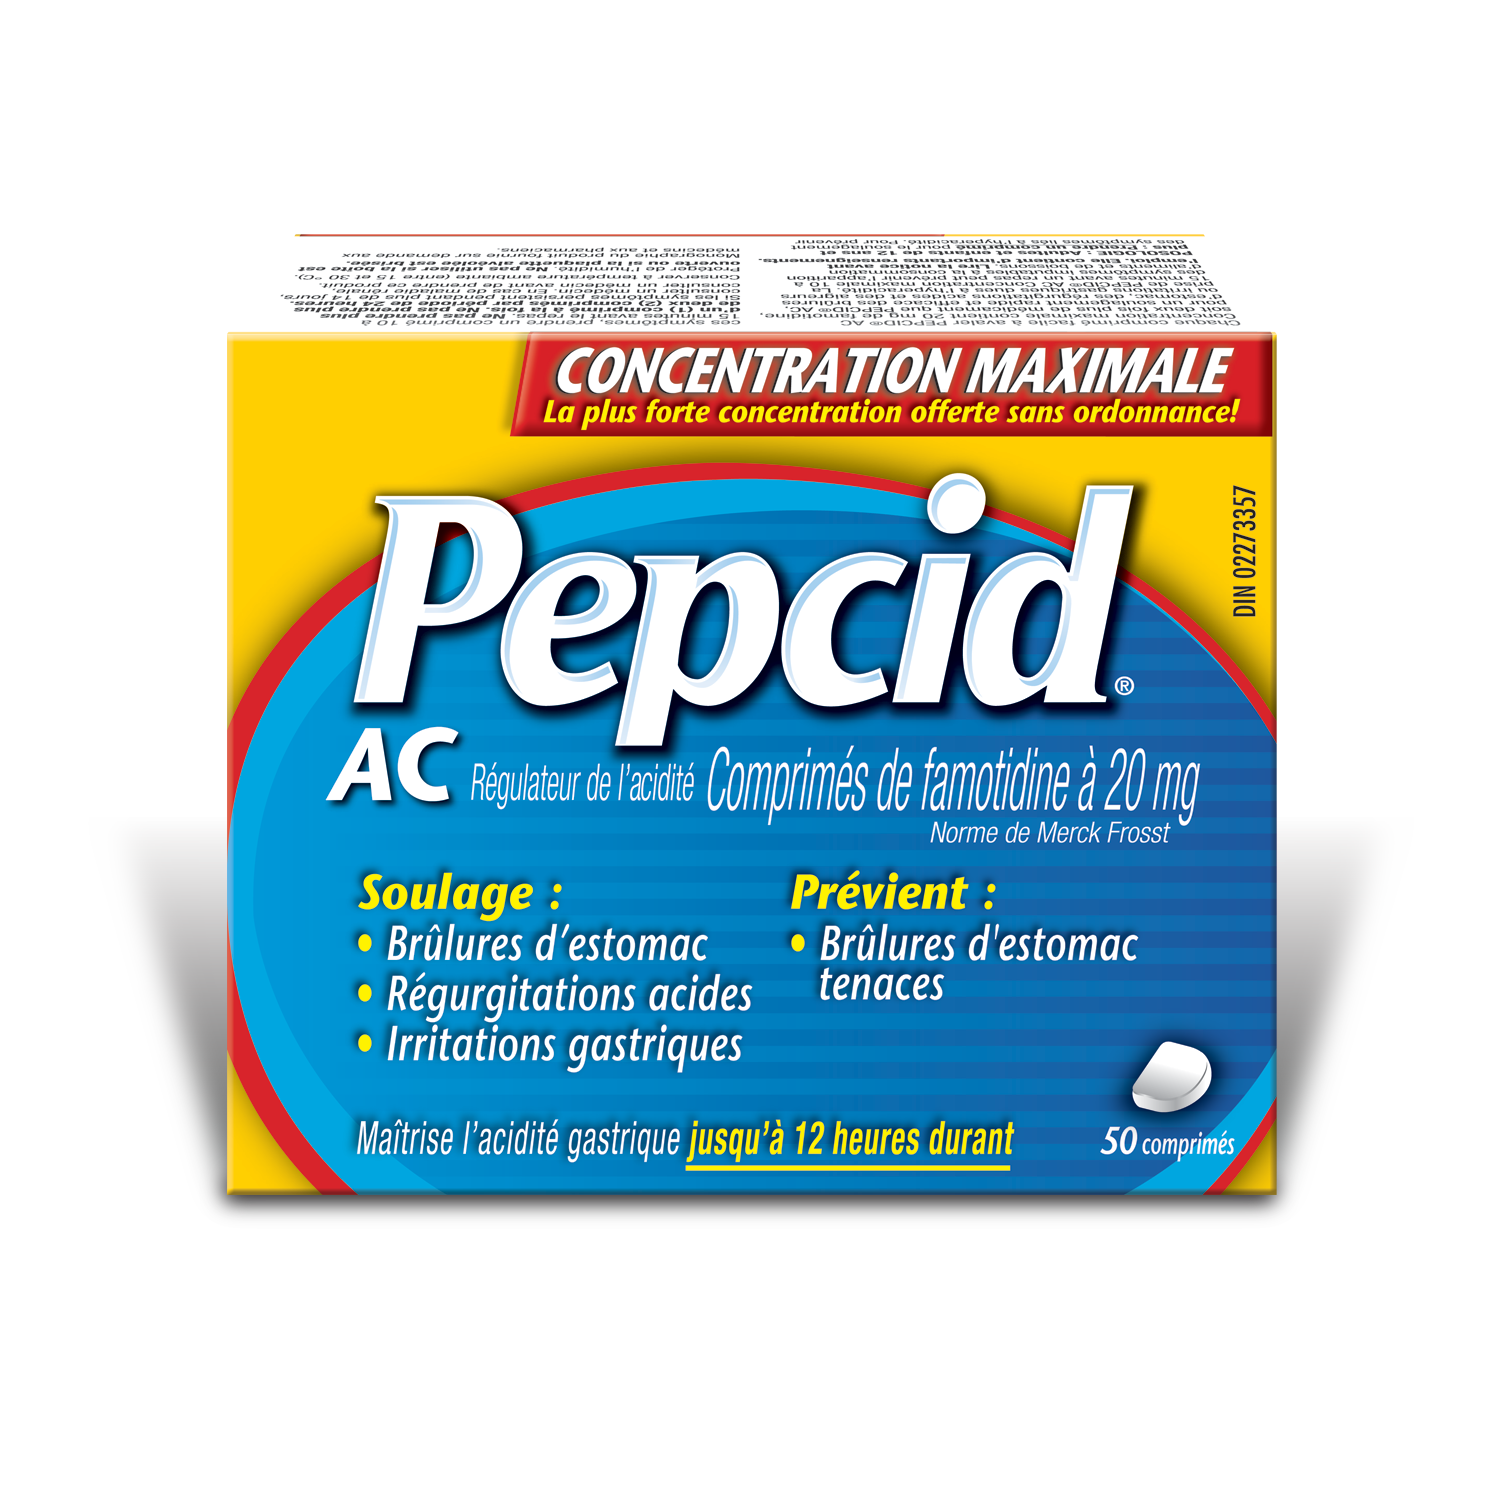 PEPCID AC® Concentration maximale